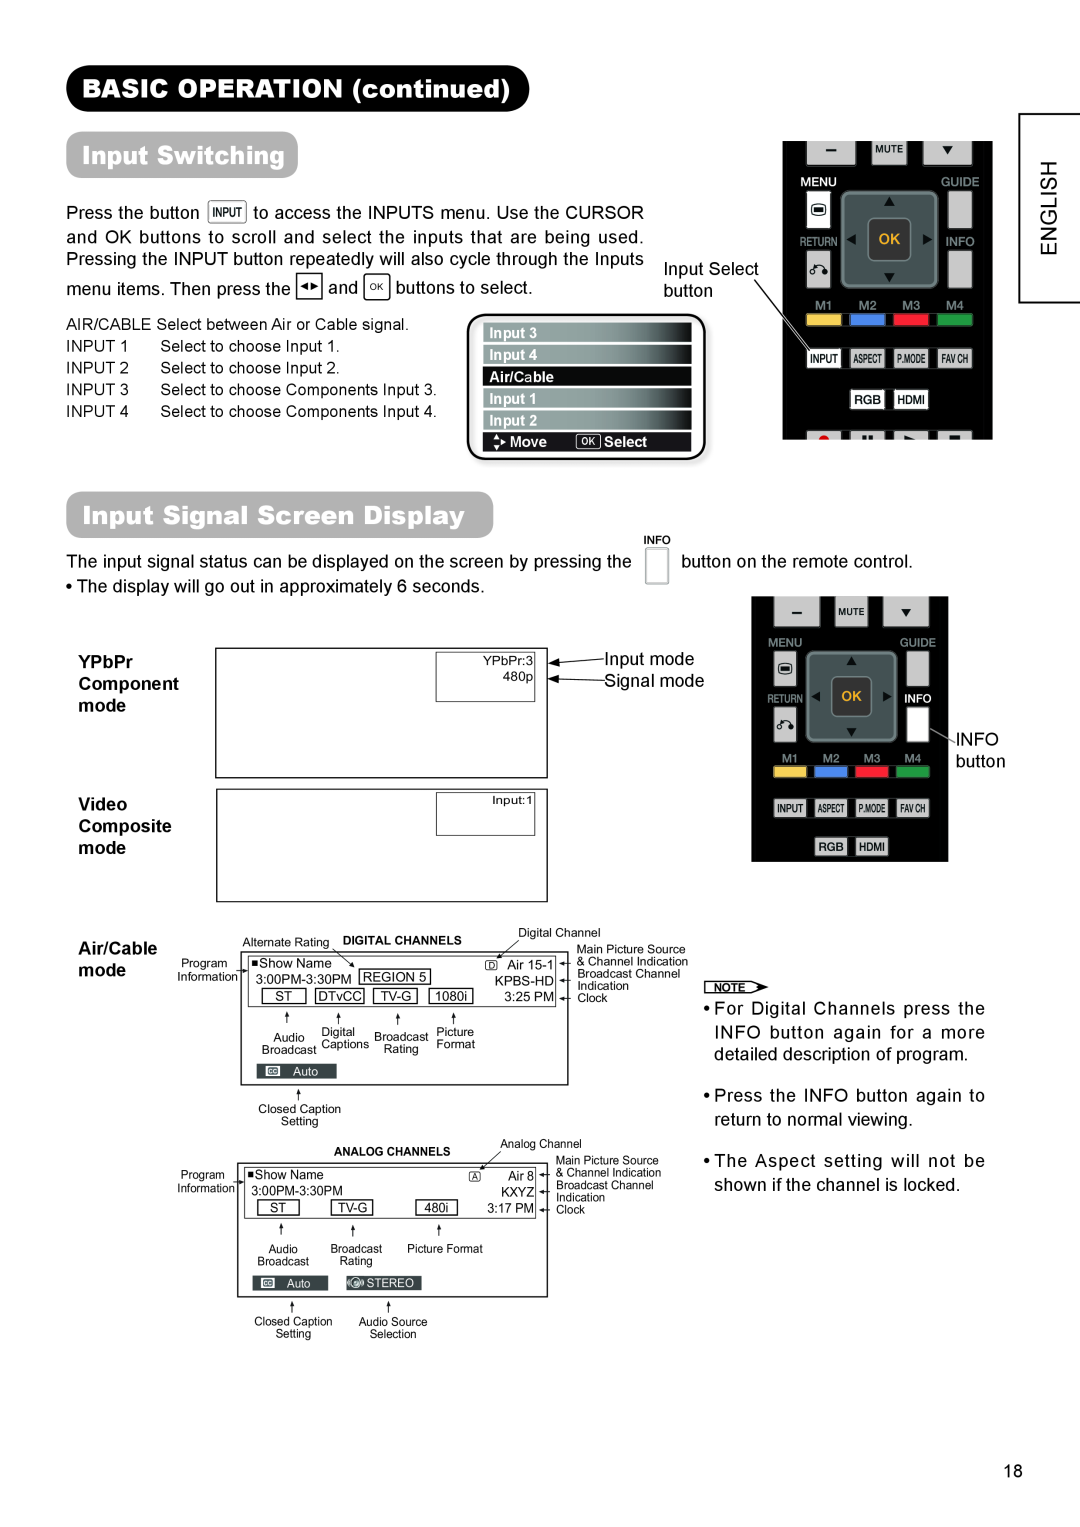 Hitachi AVC01U manual English, YPbPr, Input mode, Component, Signal mode, Info, button, Video, Composite, Air/Cable 